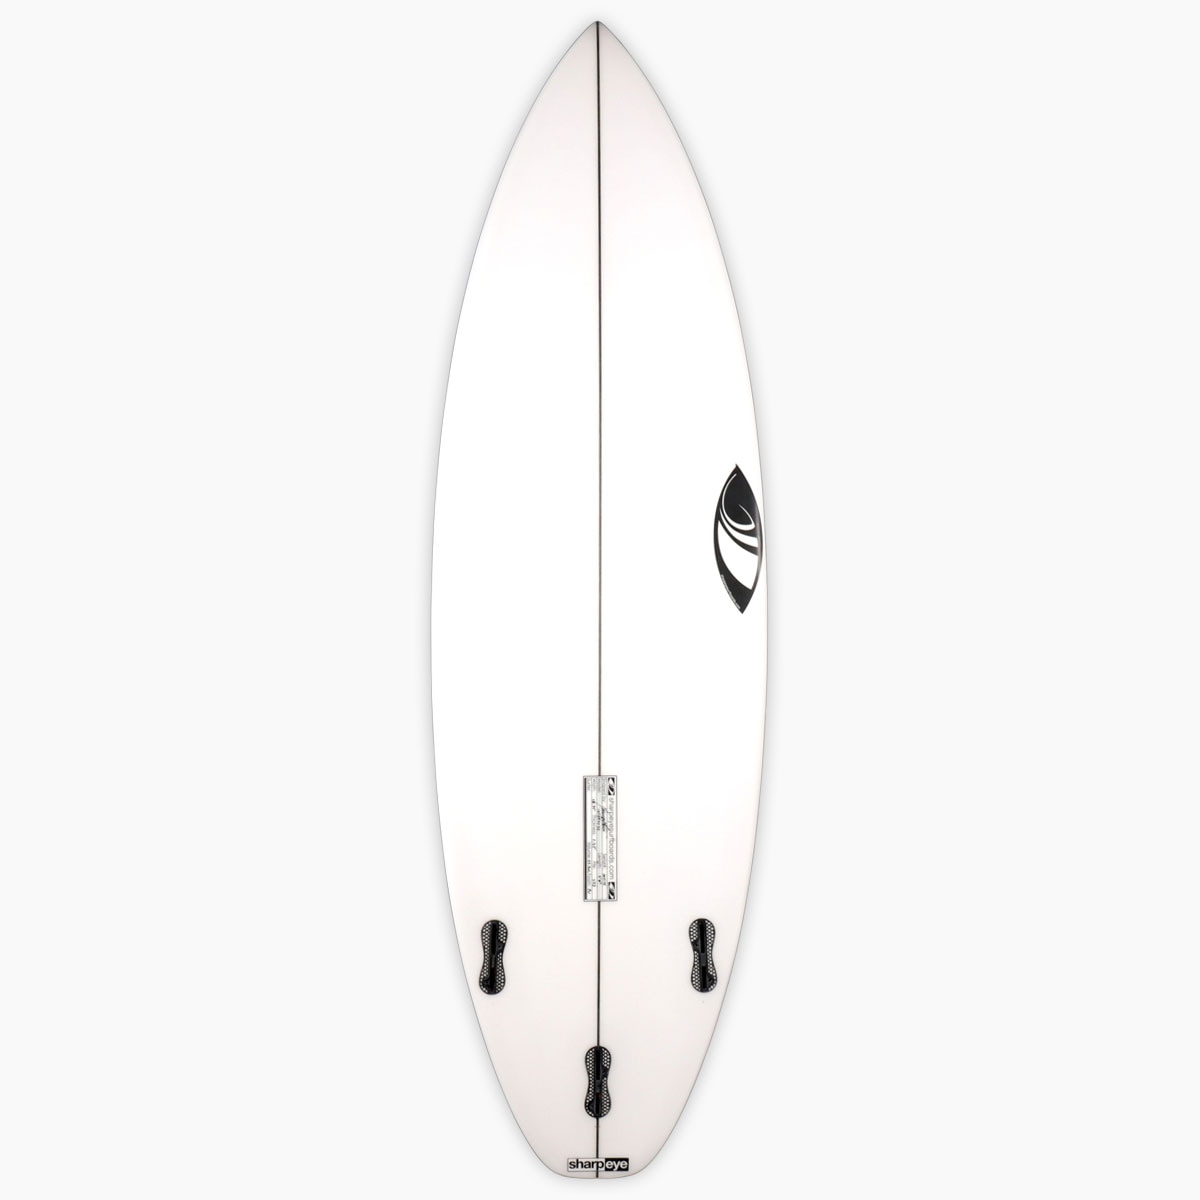 SurfBoardNet / ブランド:SHARP EYE SURFBOARDS モデル:INFERNO 72